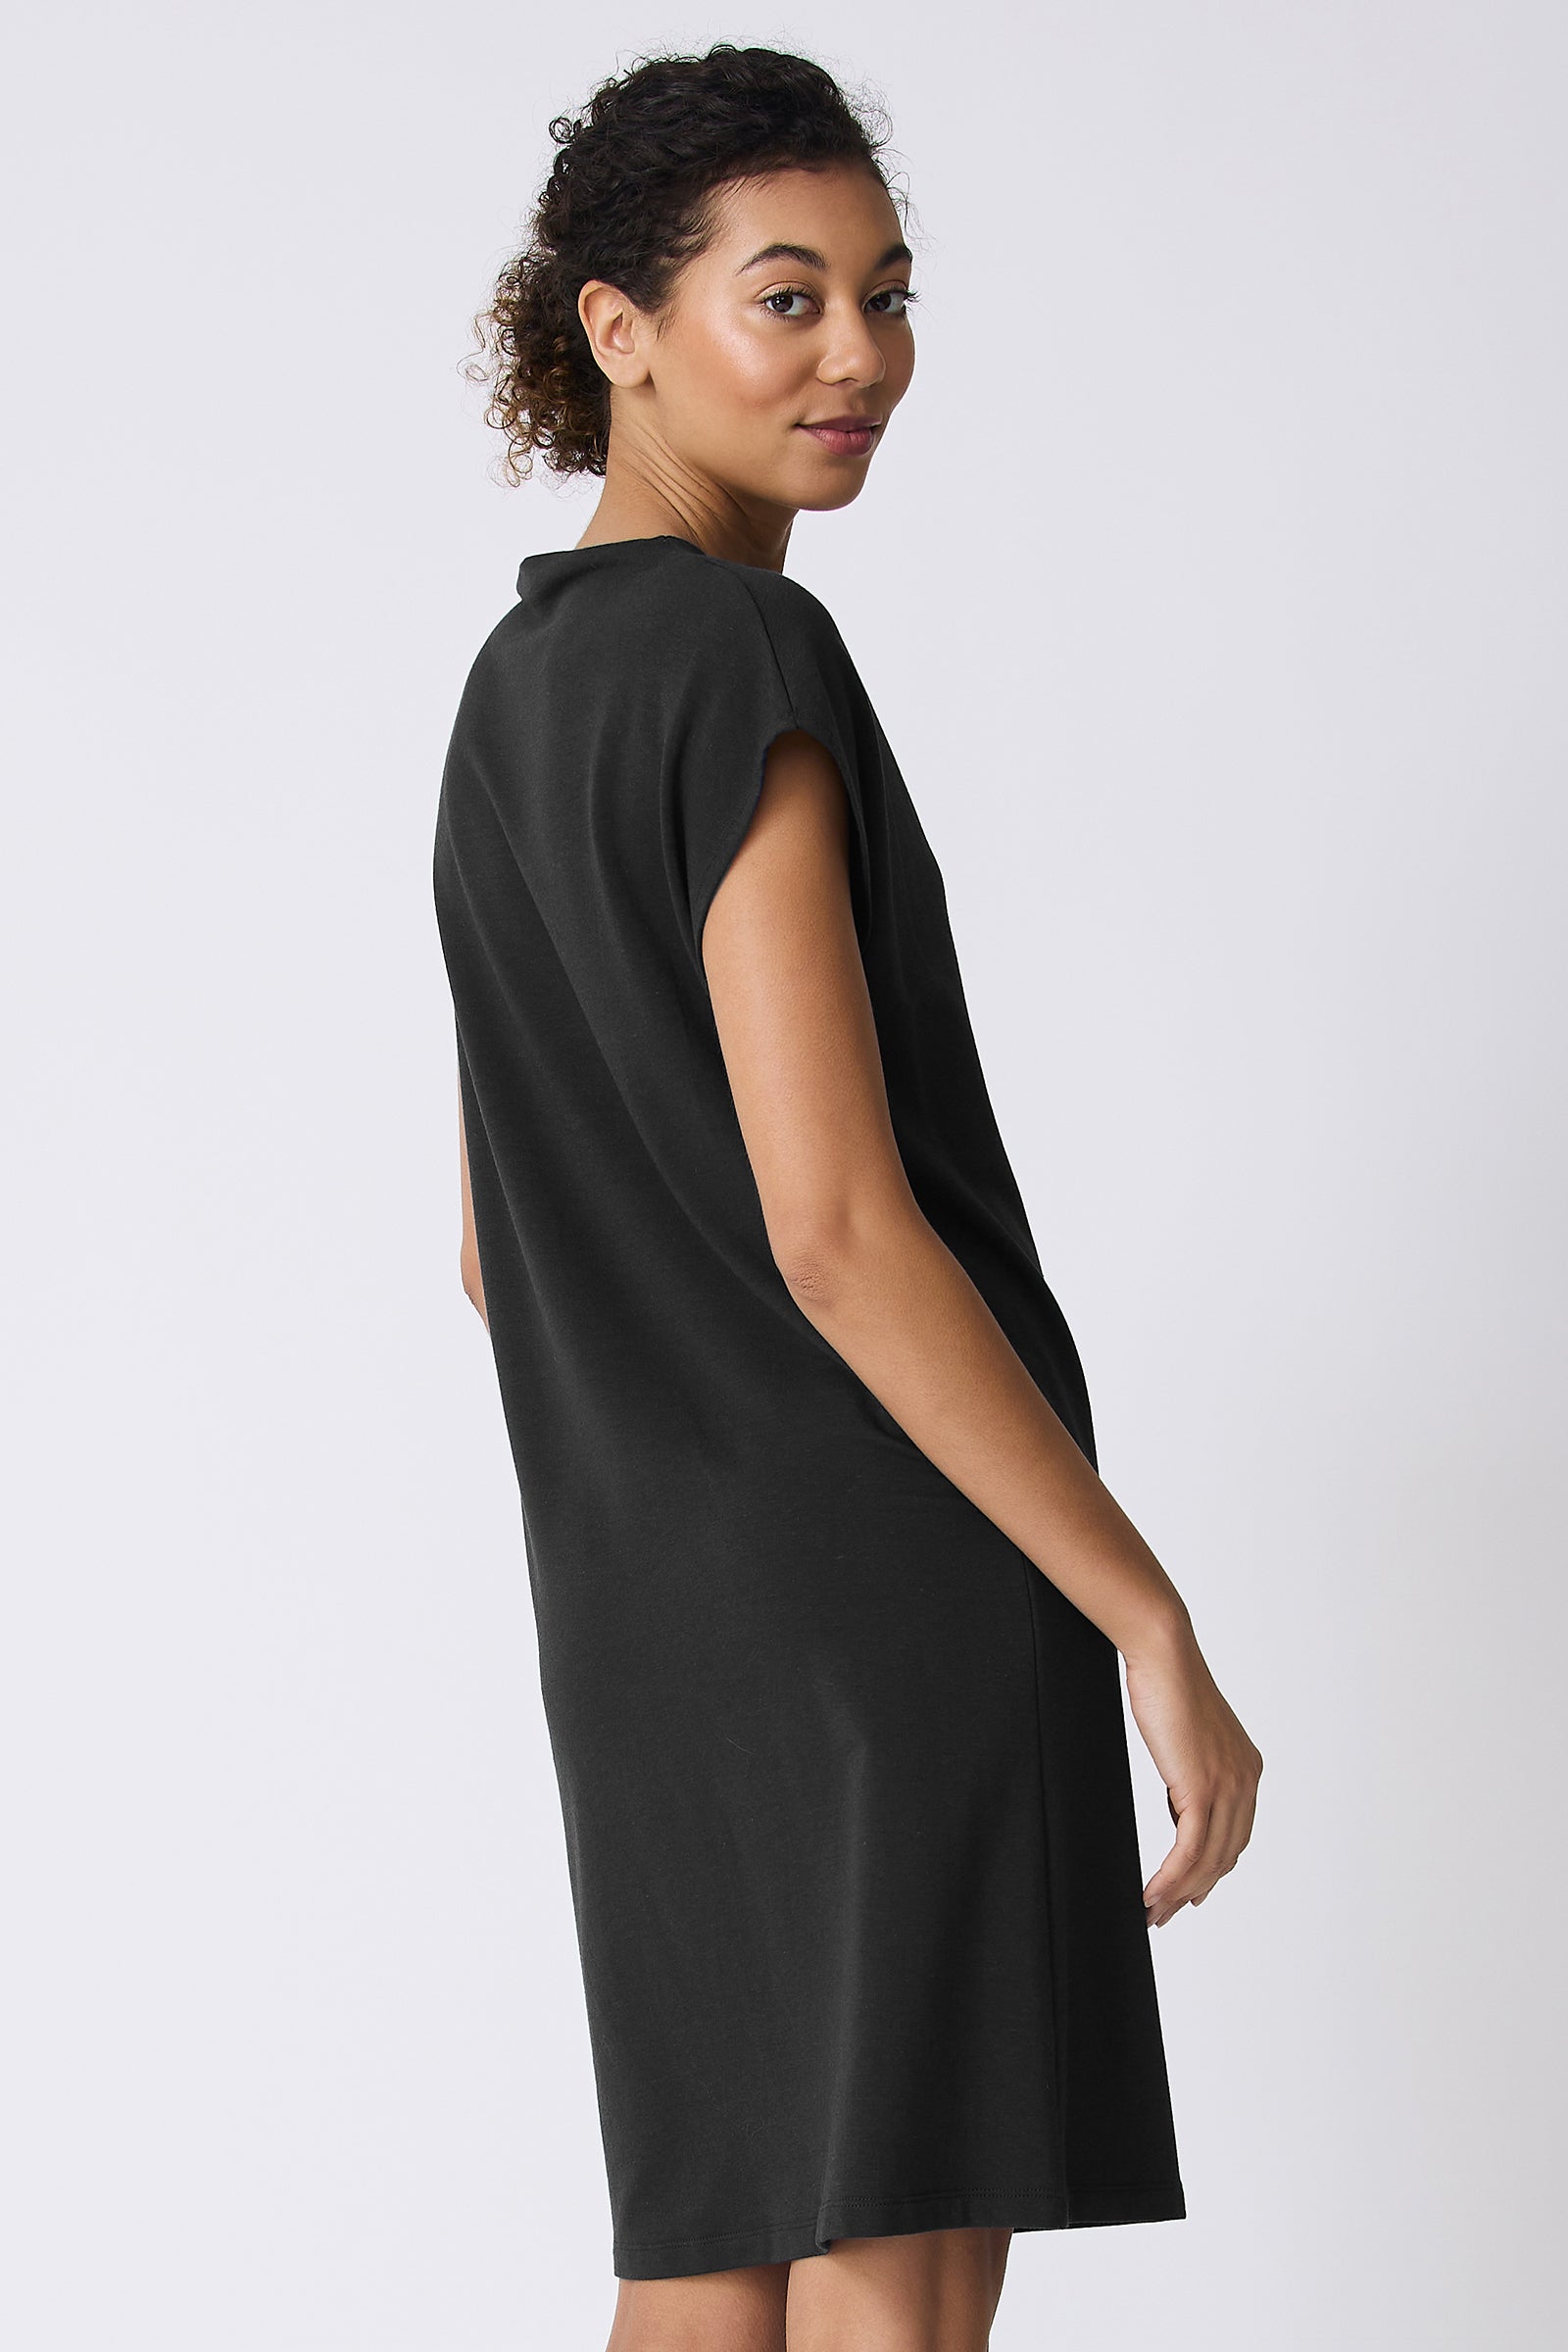 Kal Rieman Luca Cowl Dress in Black on model looking over shoulder back view